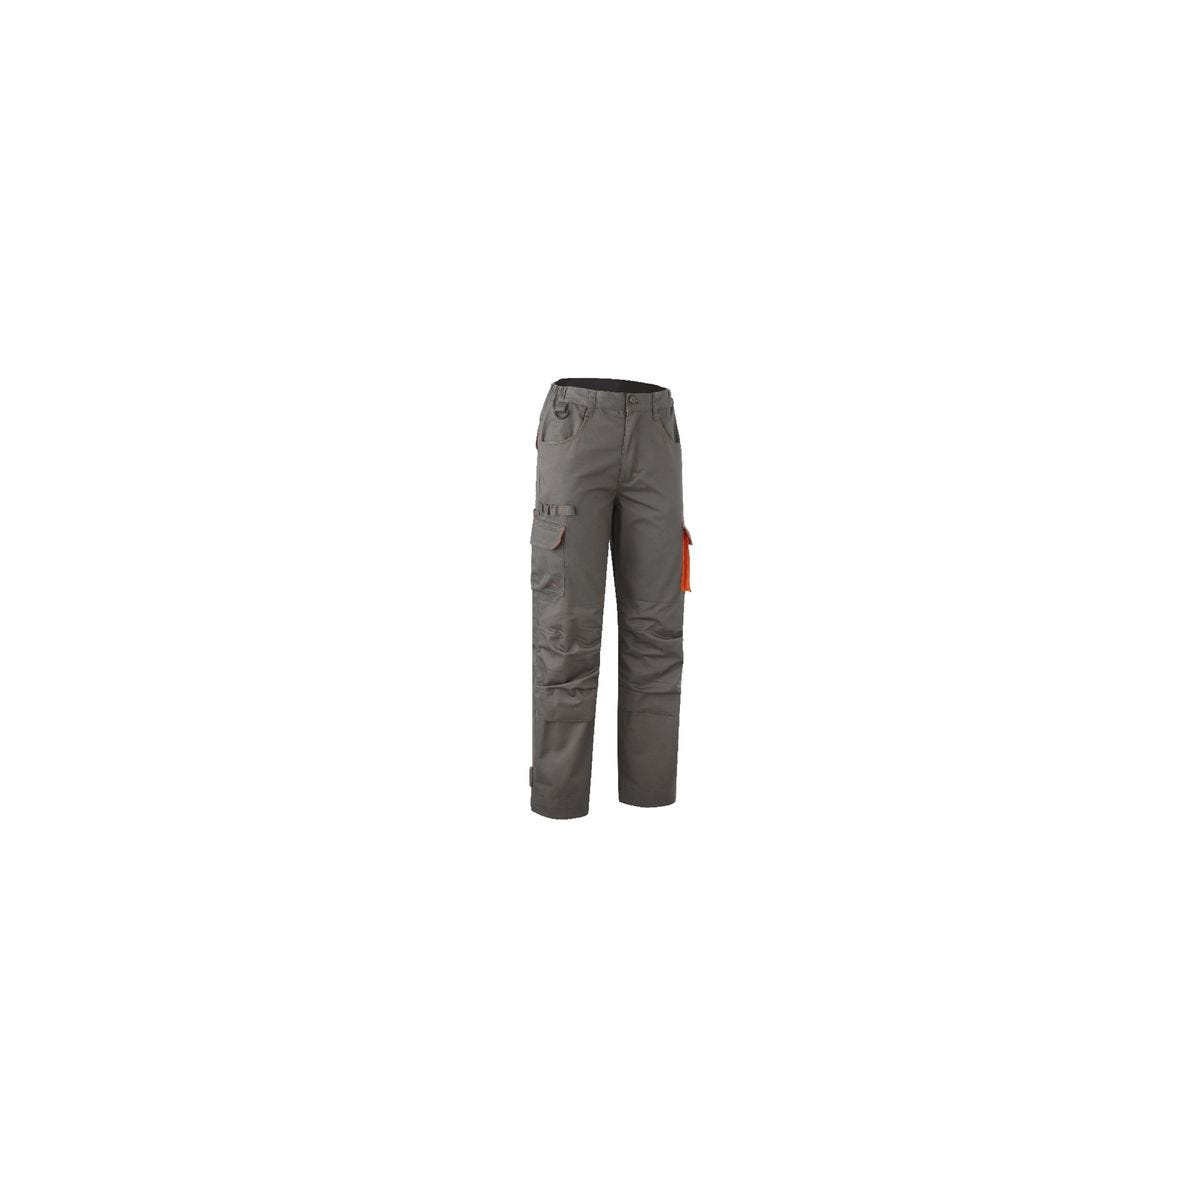 Pantalon MISTI Gris/orange - COVERGUARD - Taille M 0